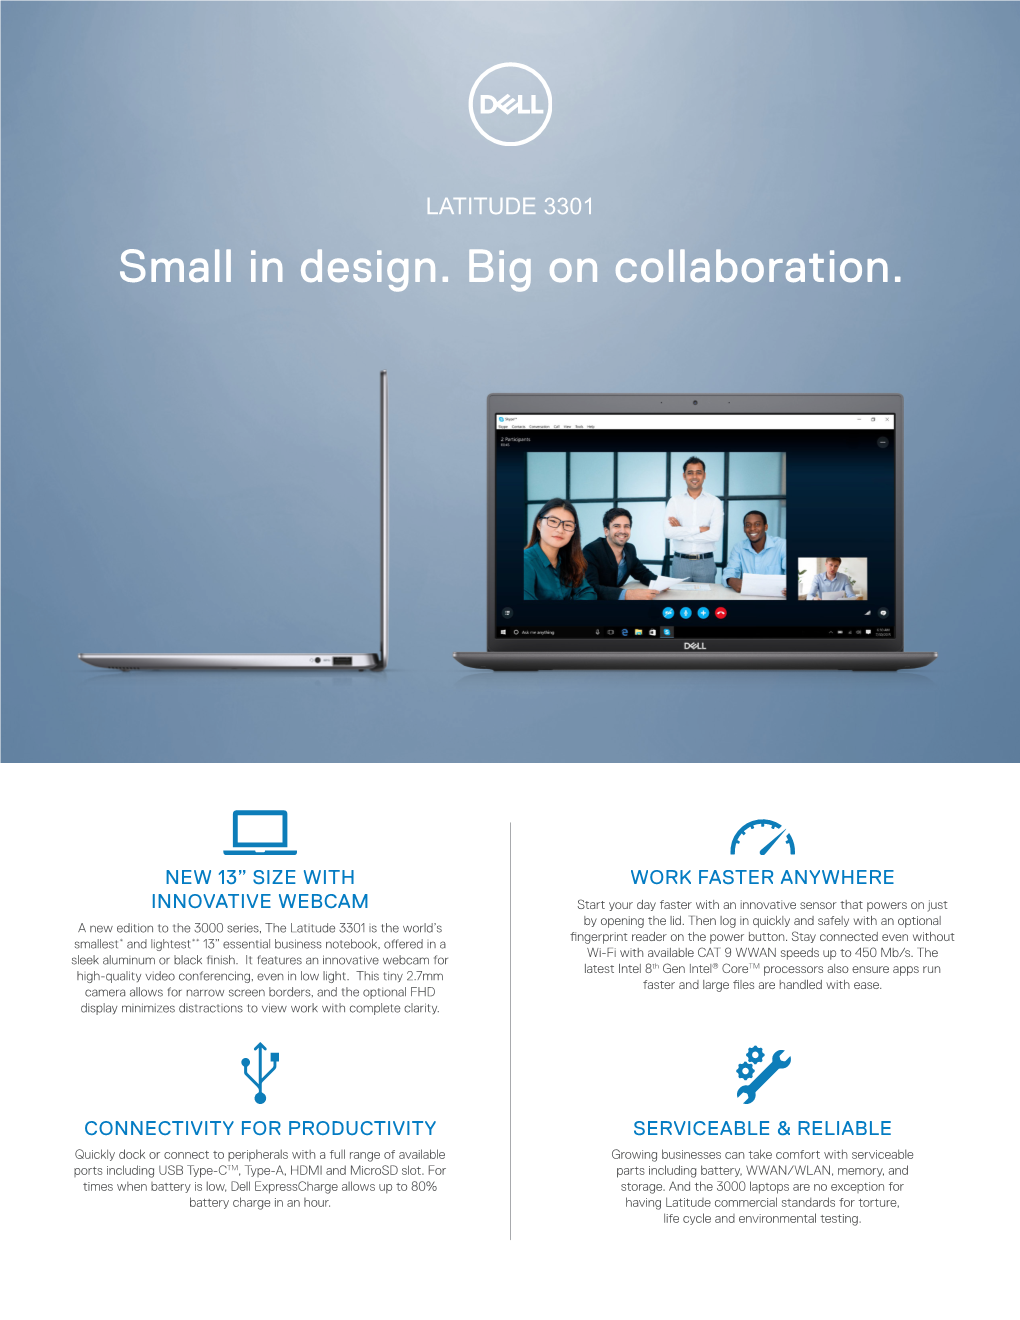 Small in Design. Big on Collaboration